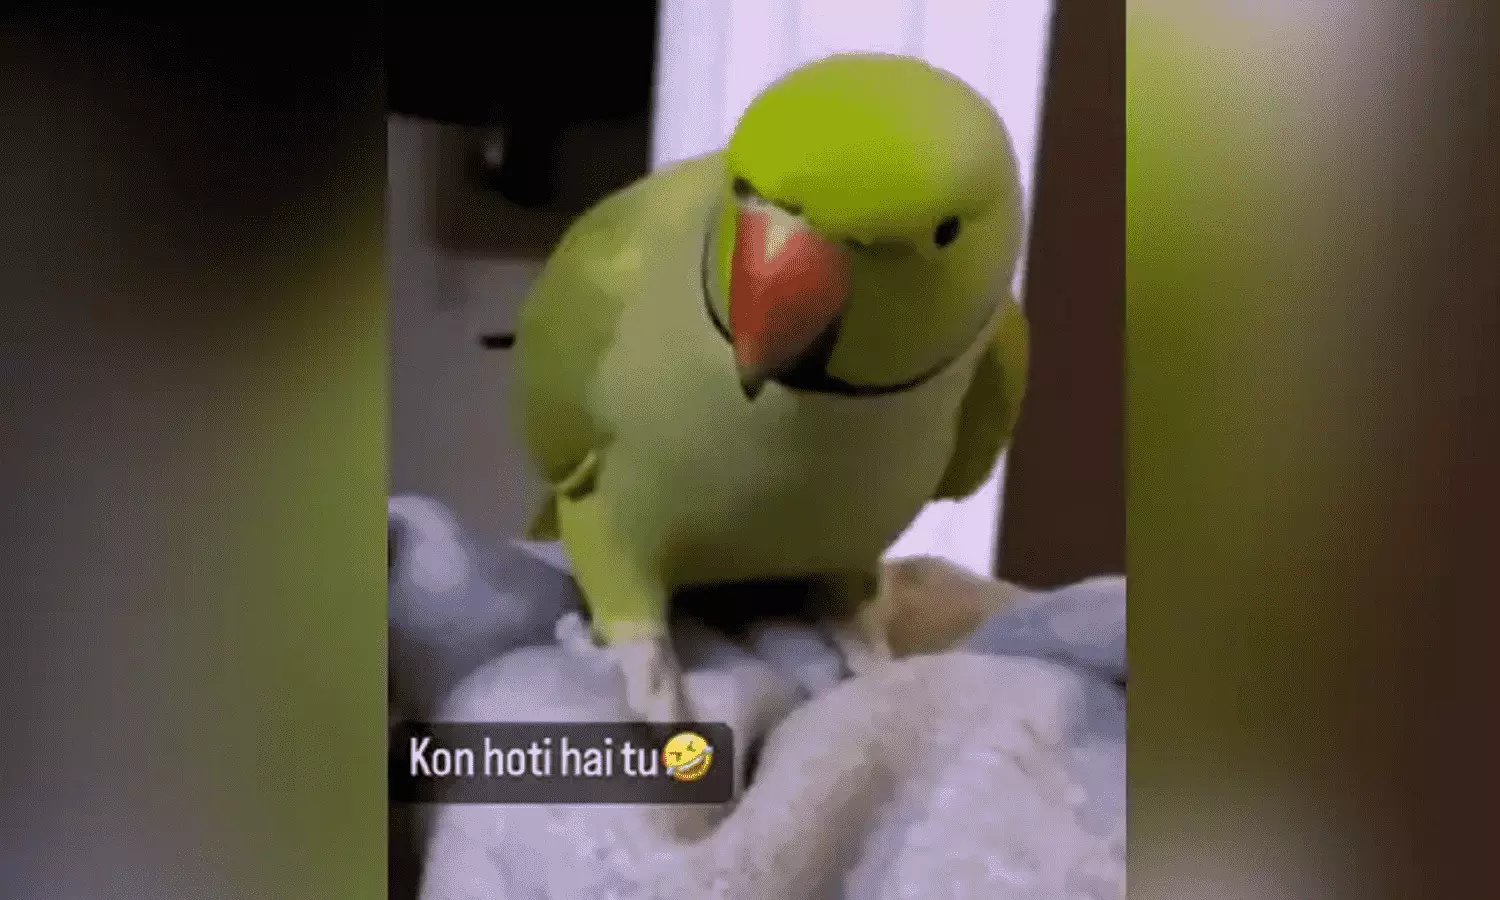 Parrot Video